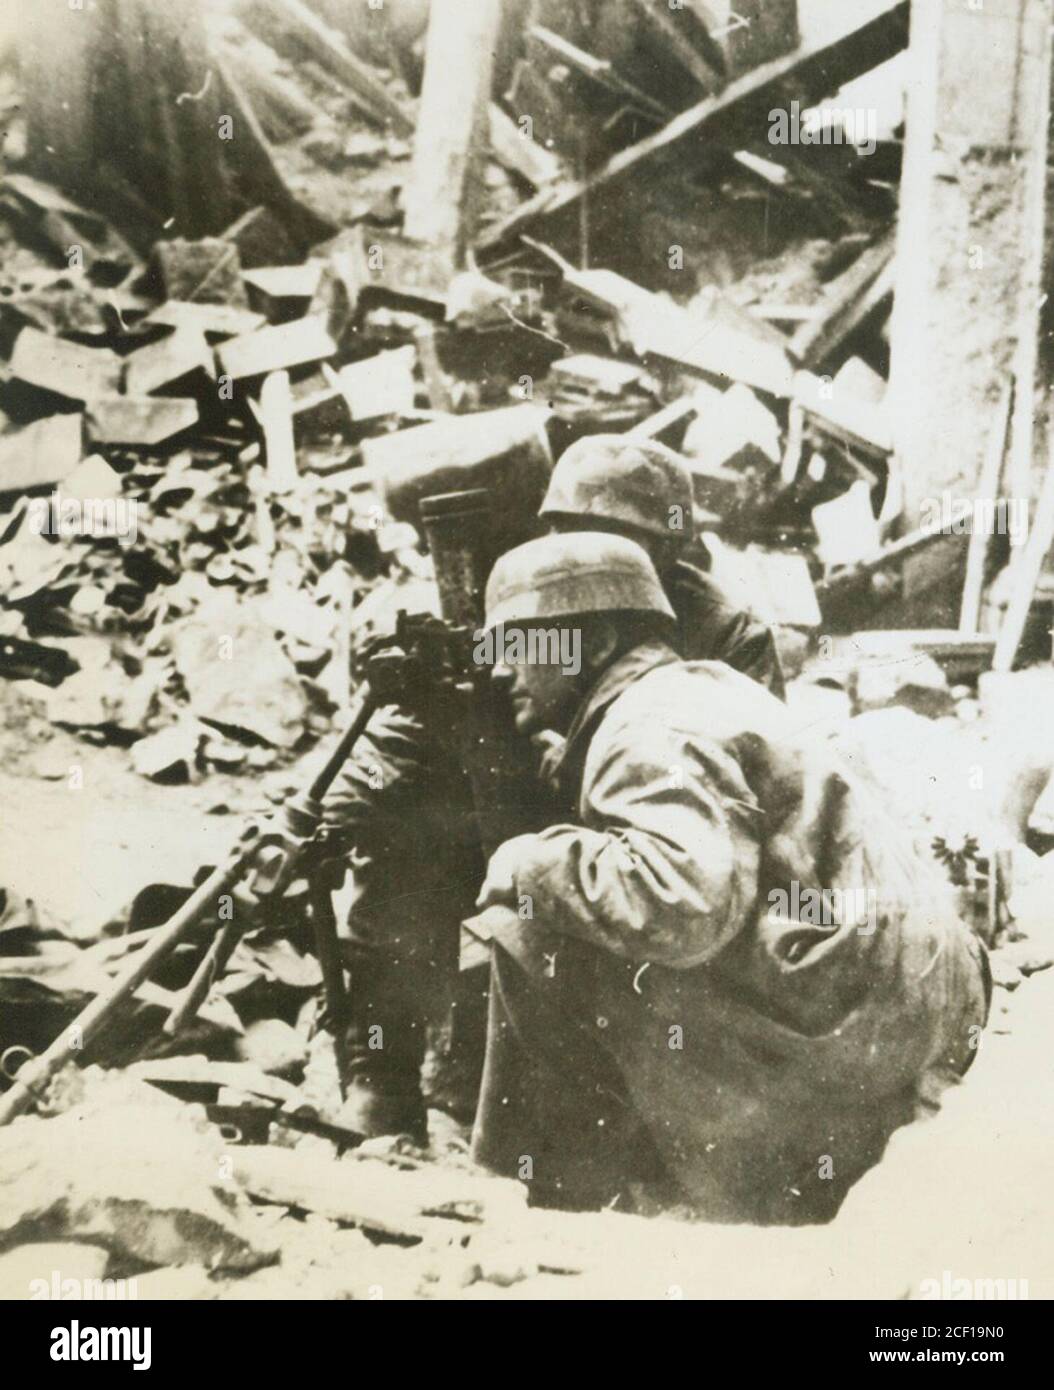 Nazi Paratroopers “Gunning” in Italian streets Stock Photo